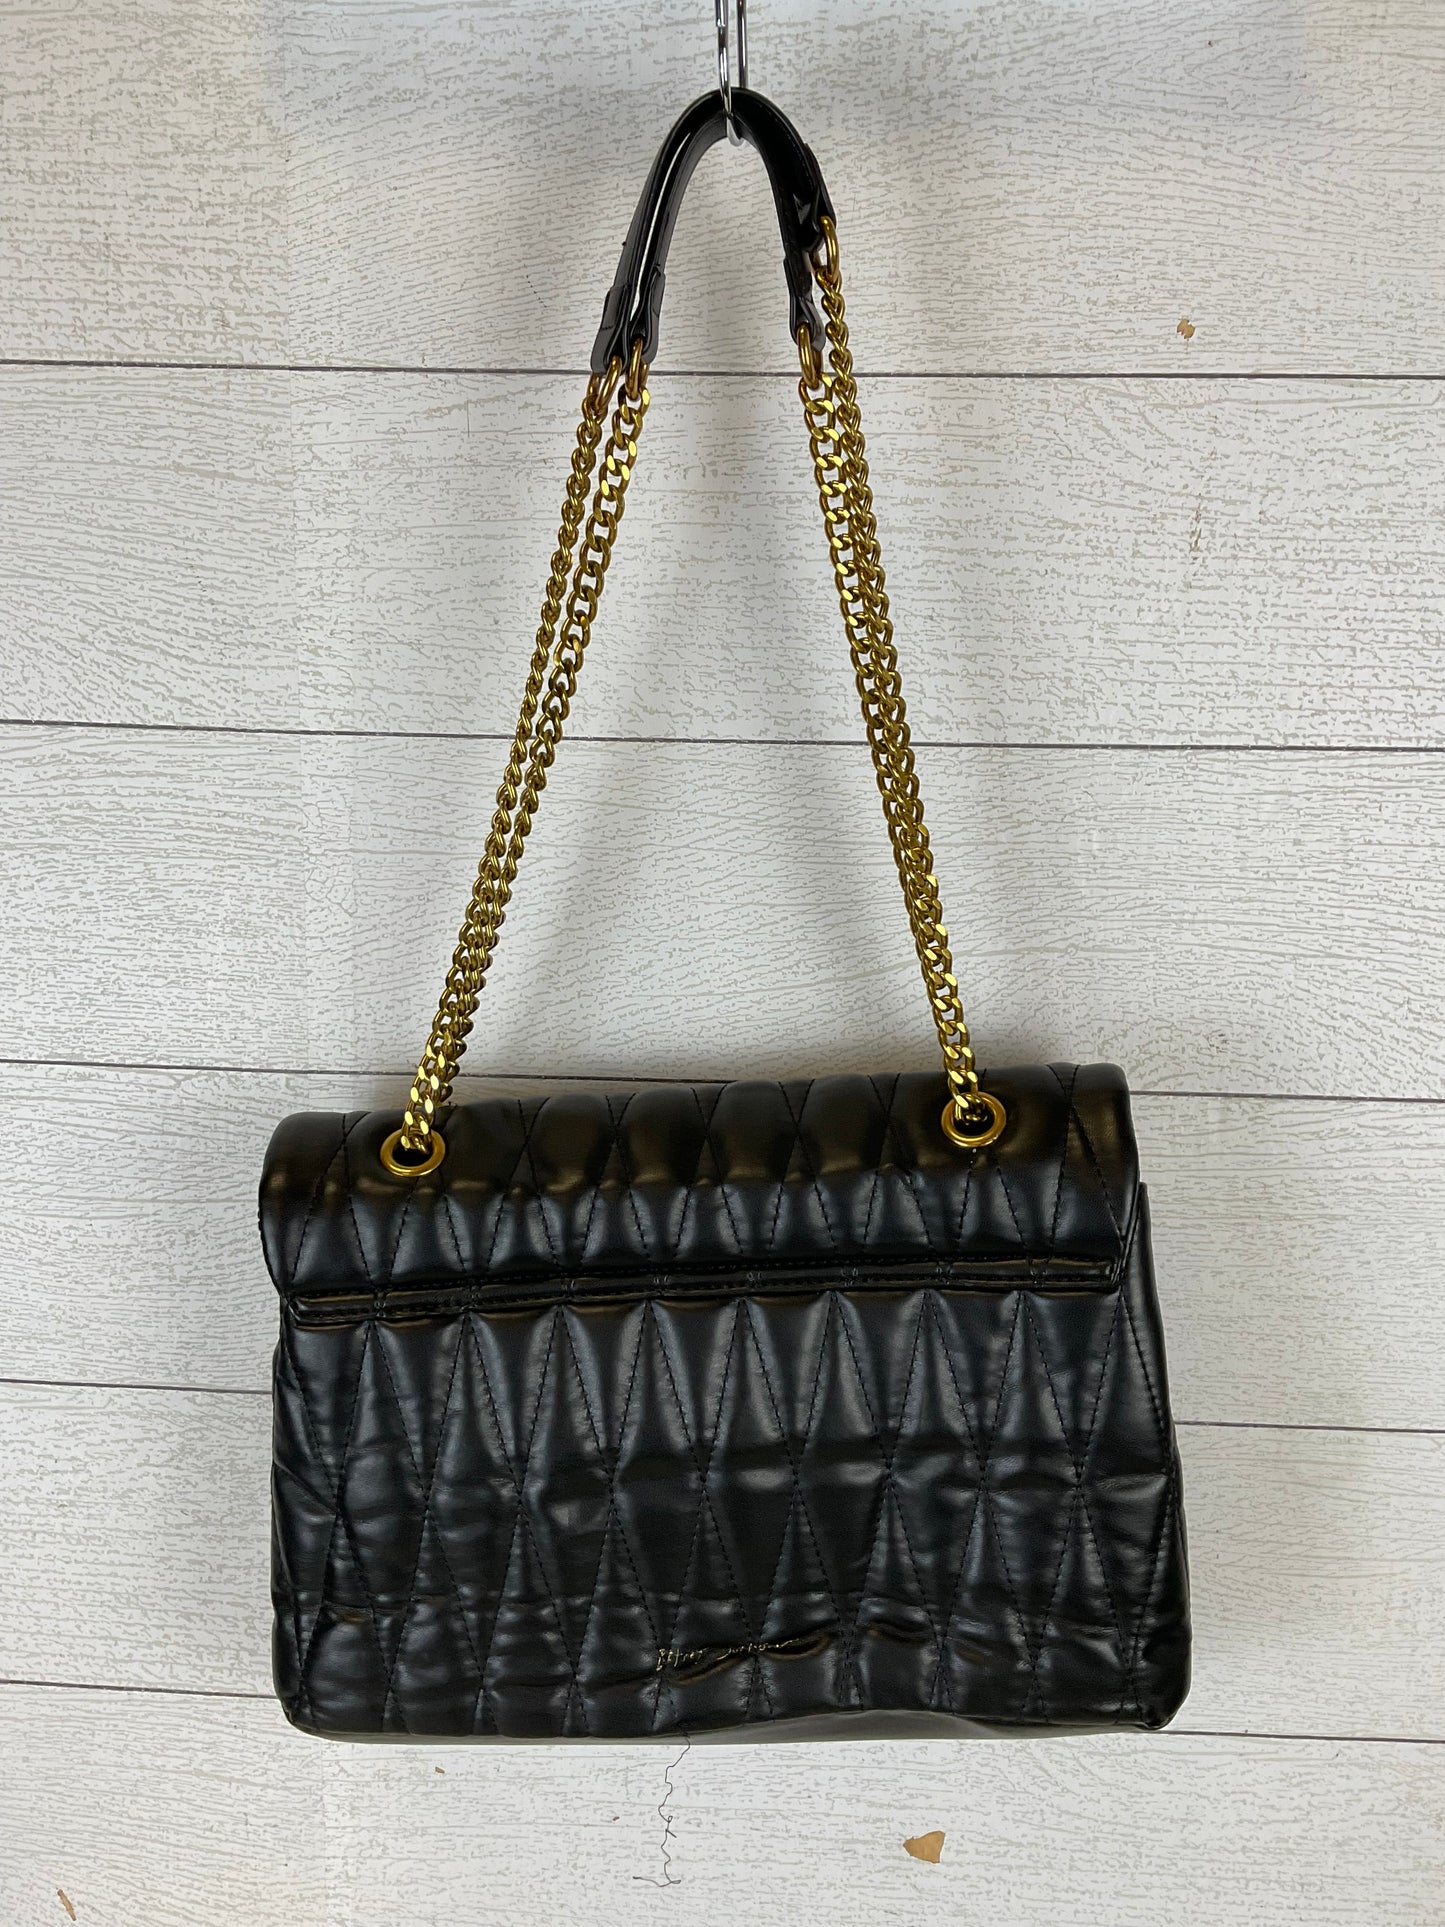 Handbag By Betsey Johnson  Size: Medium